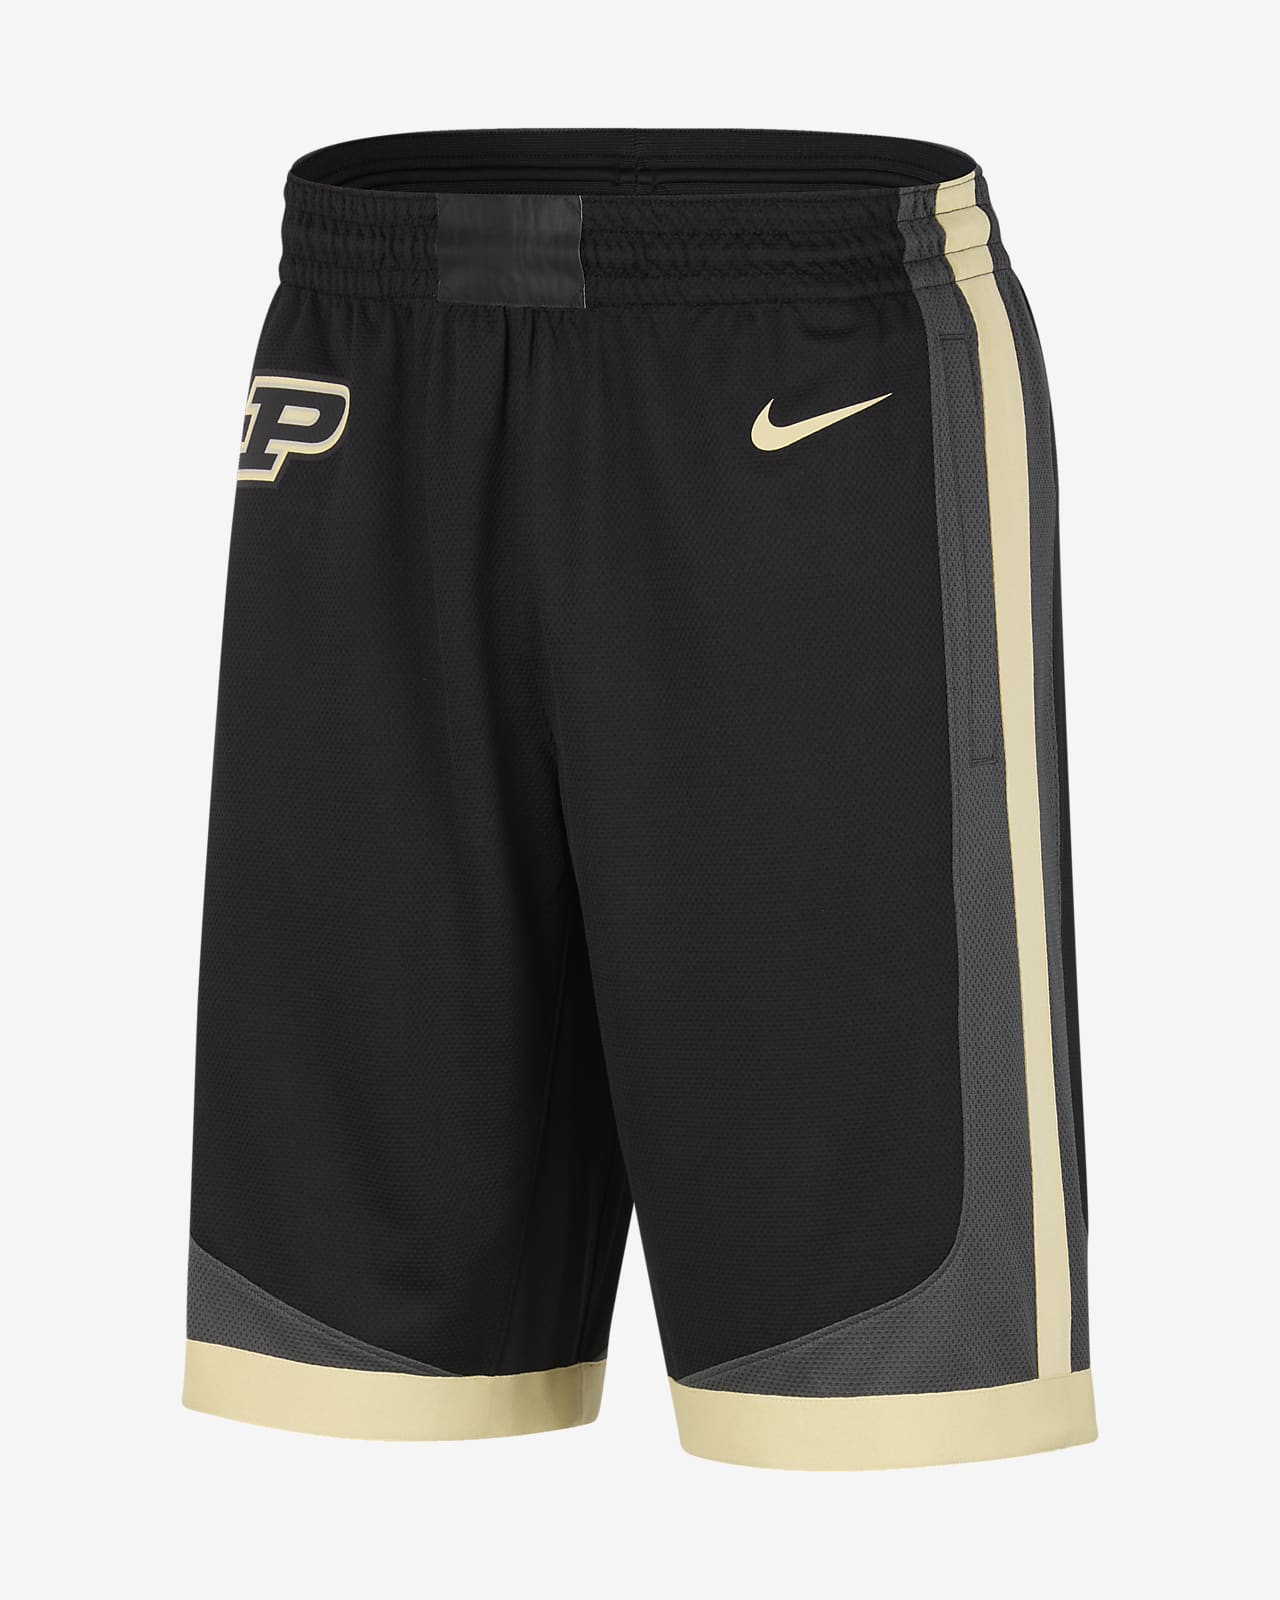 Nike College (Purdue) Men's Replica Basketball Shorts